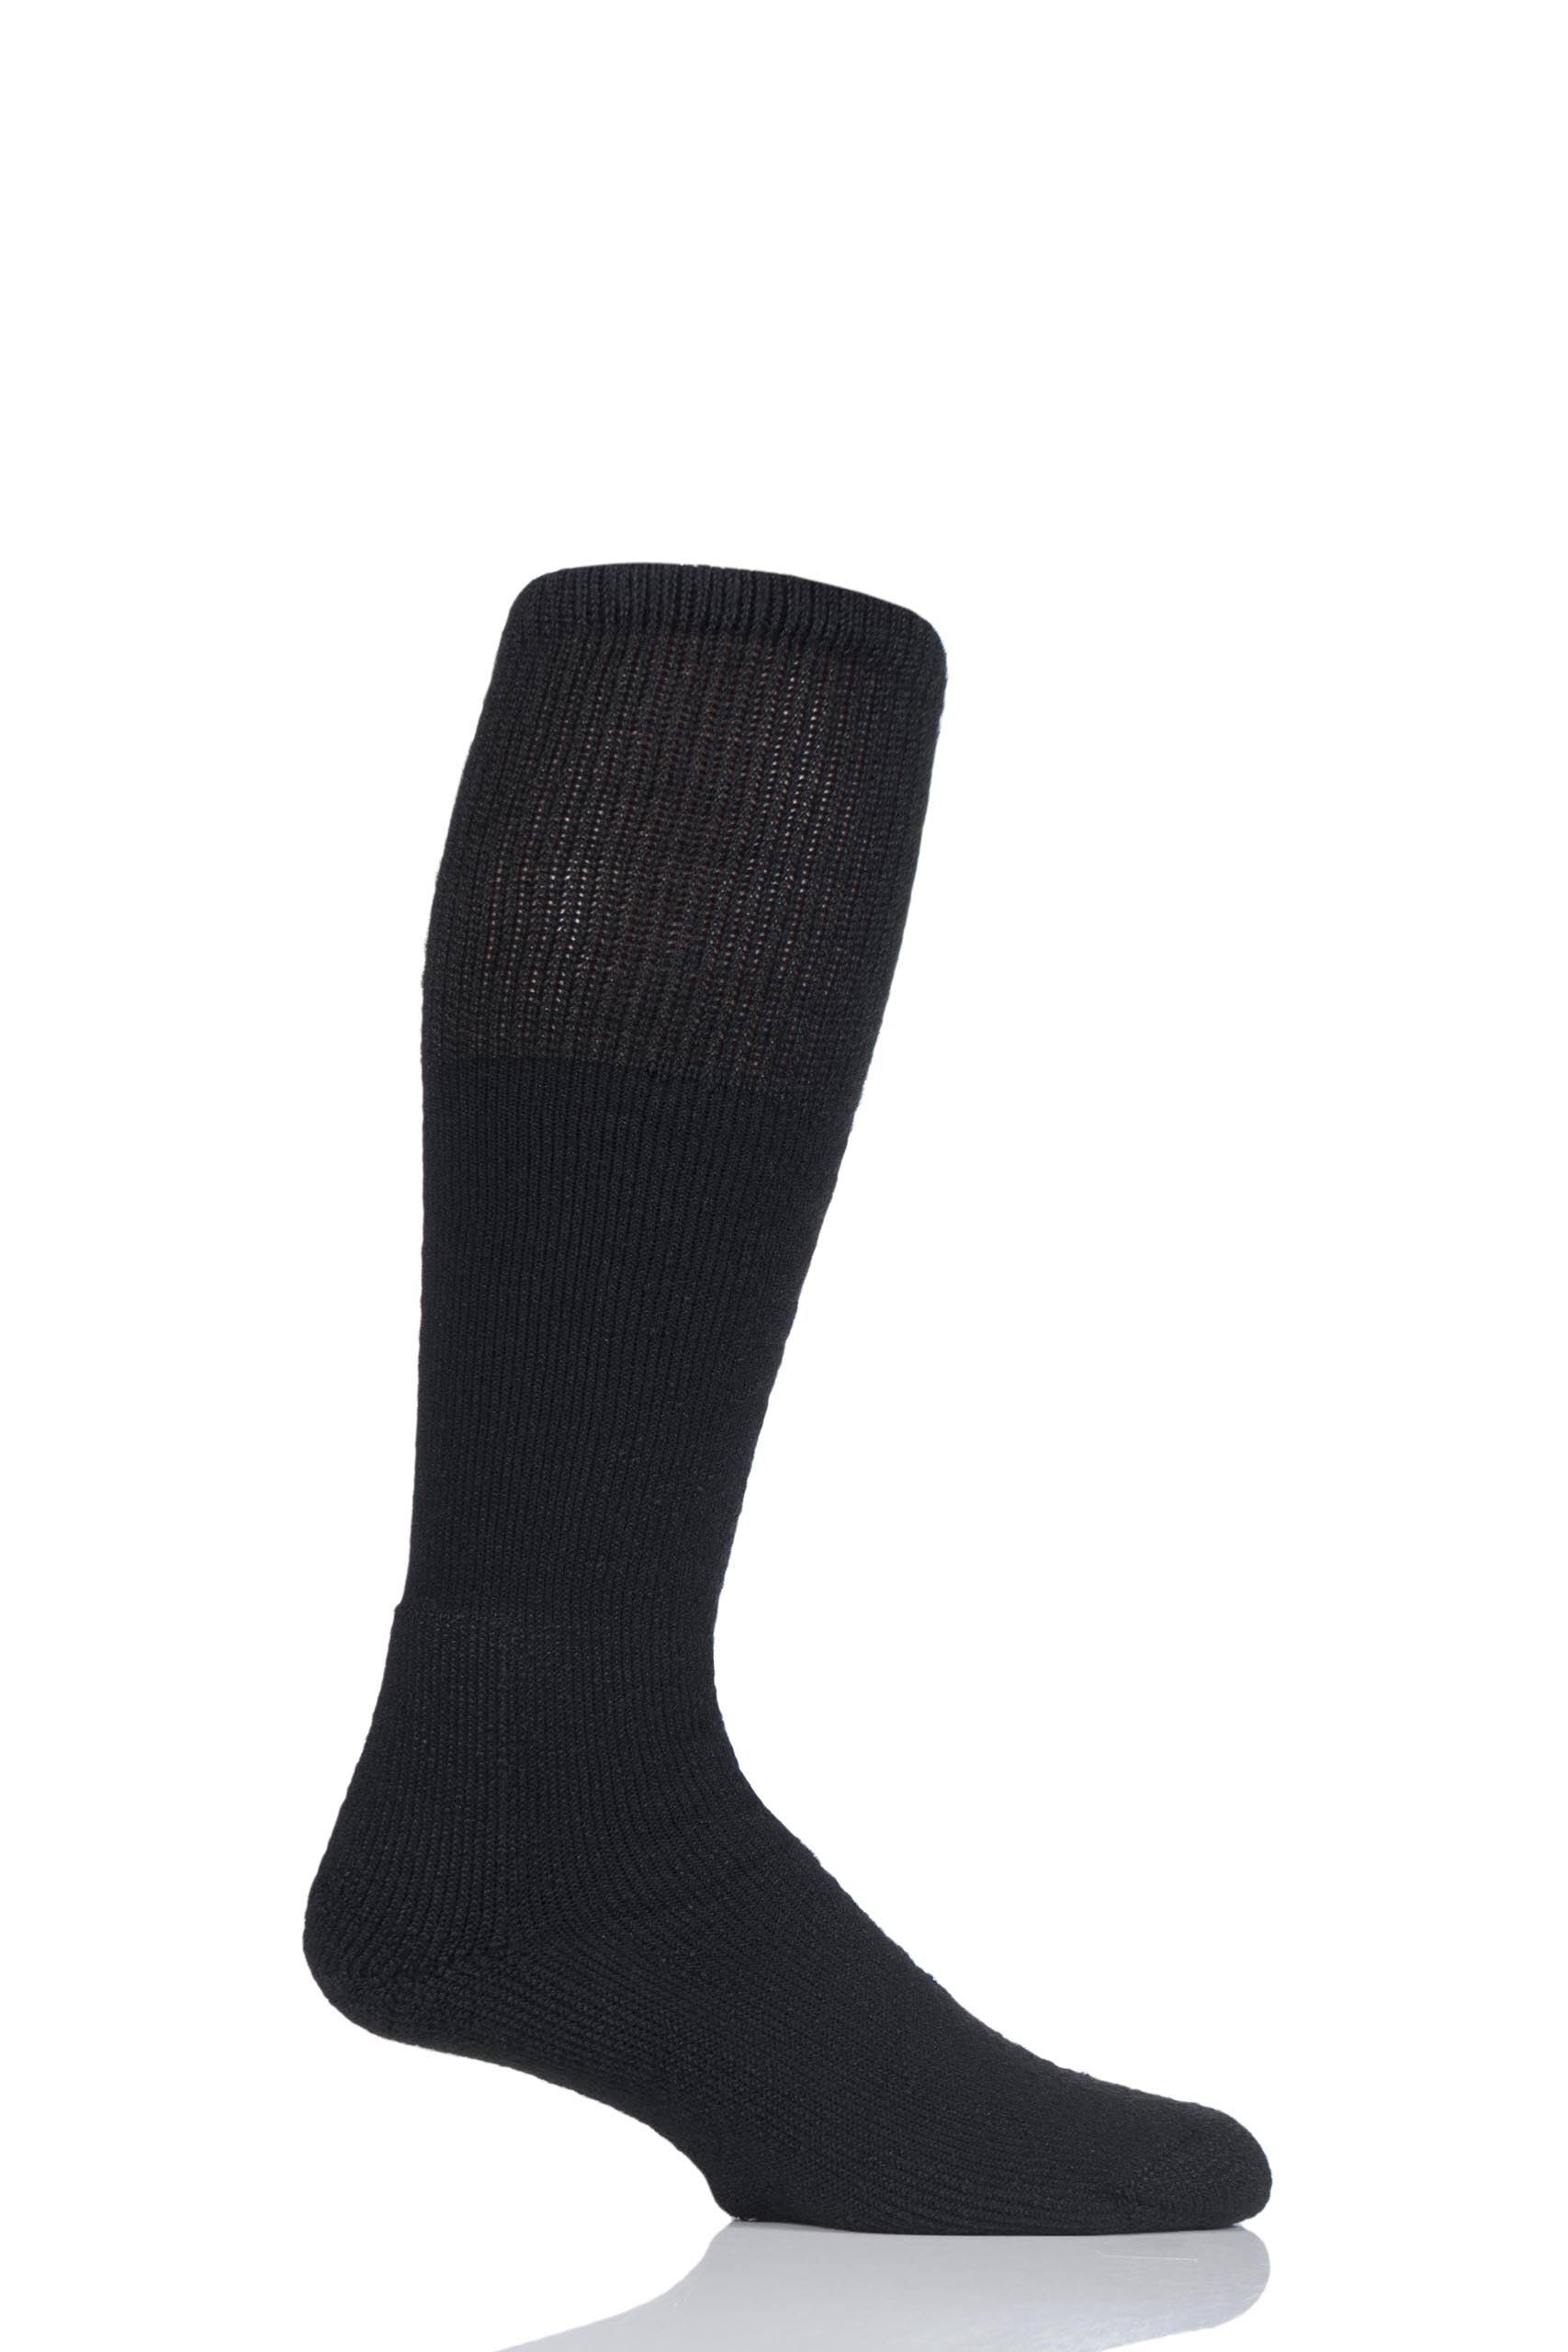 Thorlo Women's SKX Ski Sock - Black Diamond, Medium